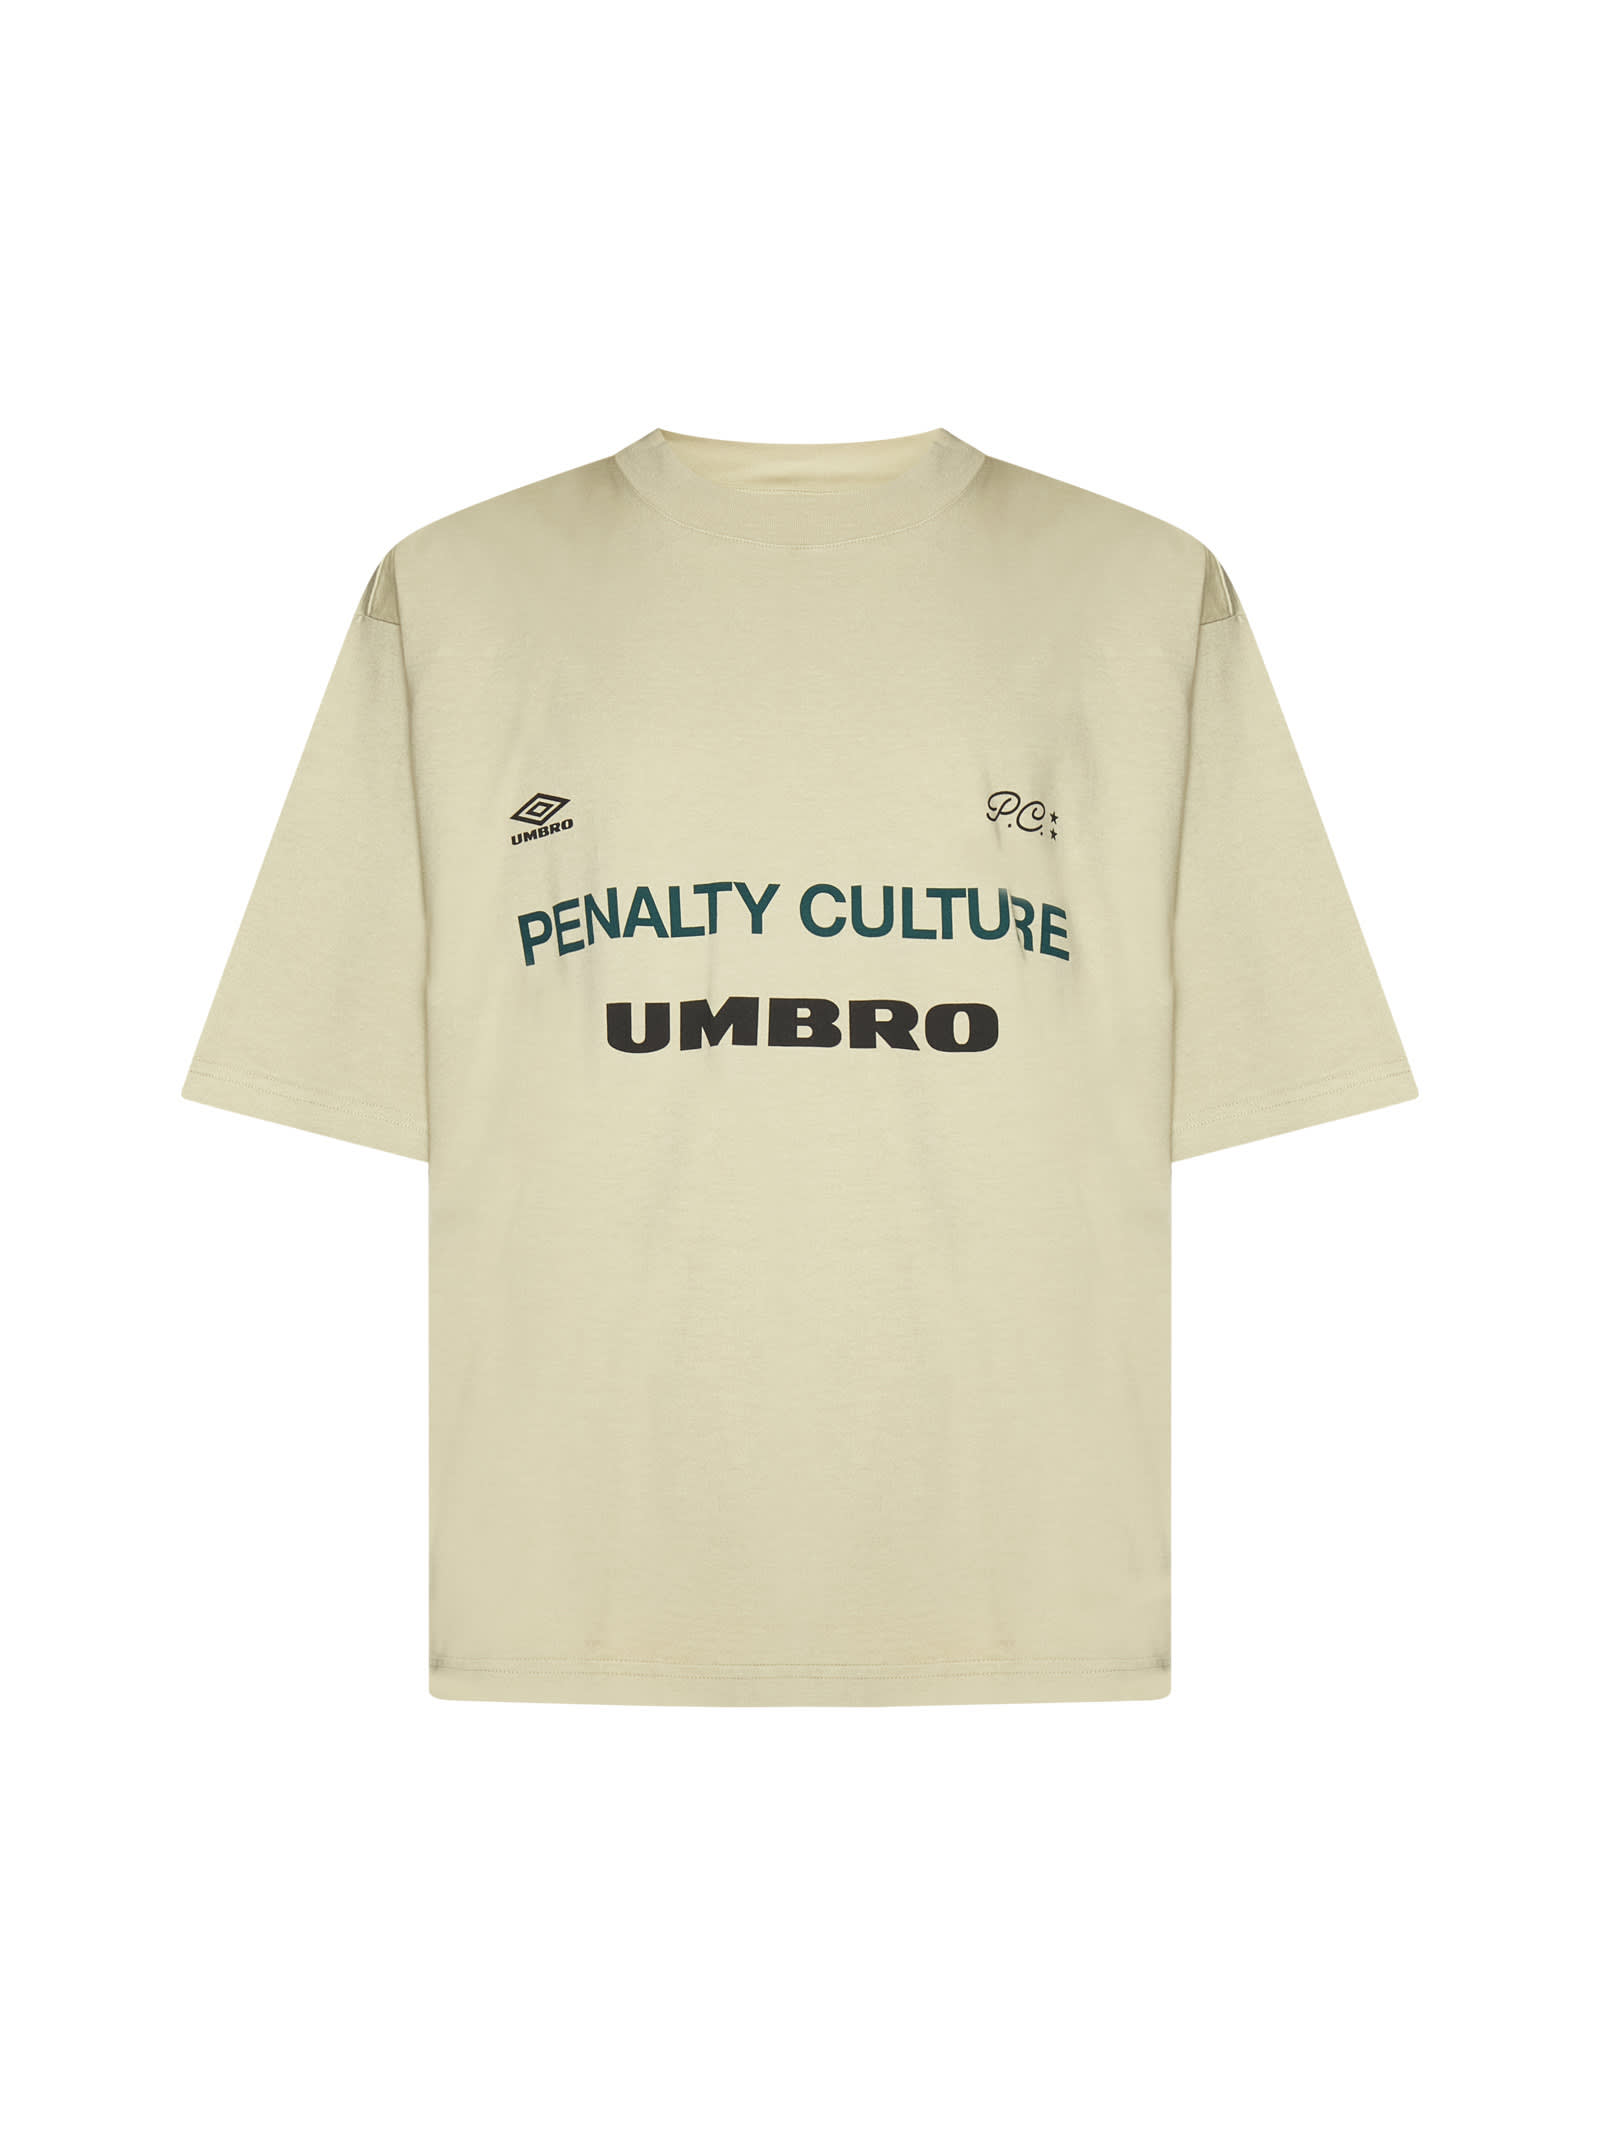 UMBRO T-SHIRT